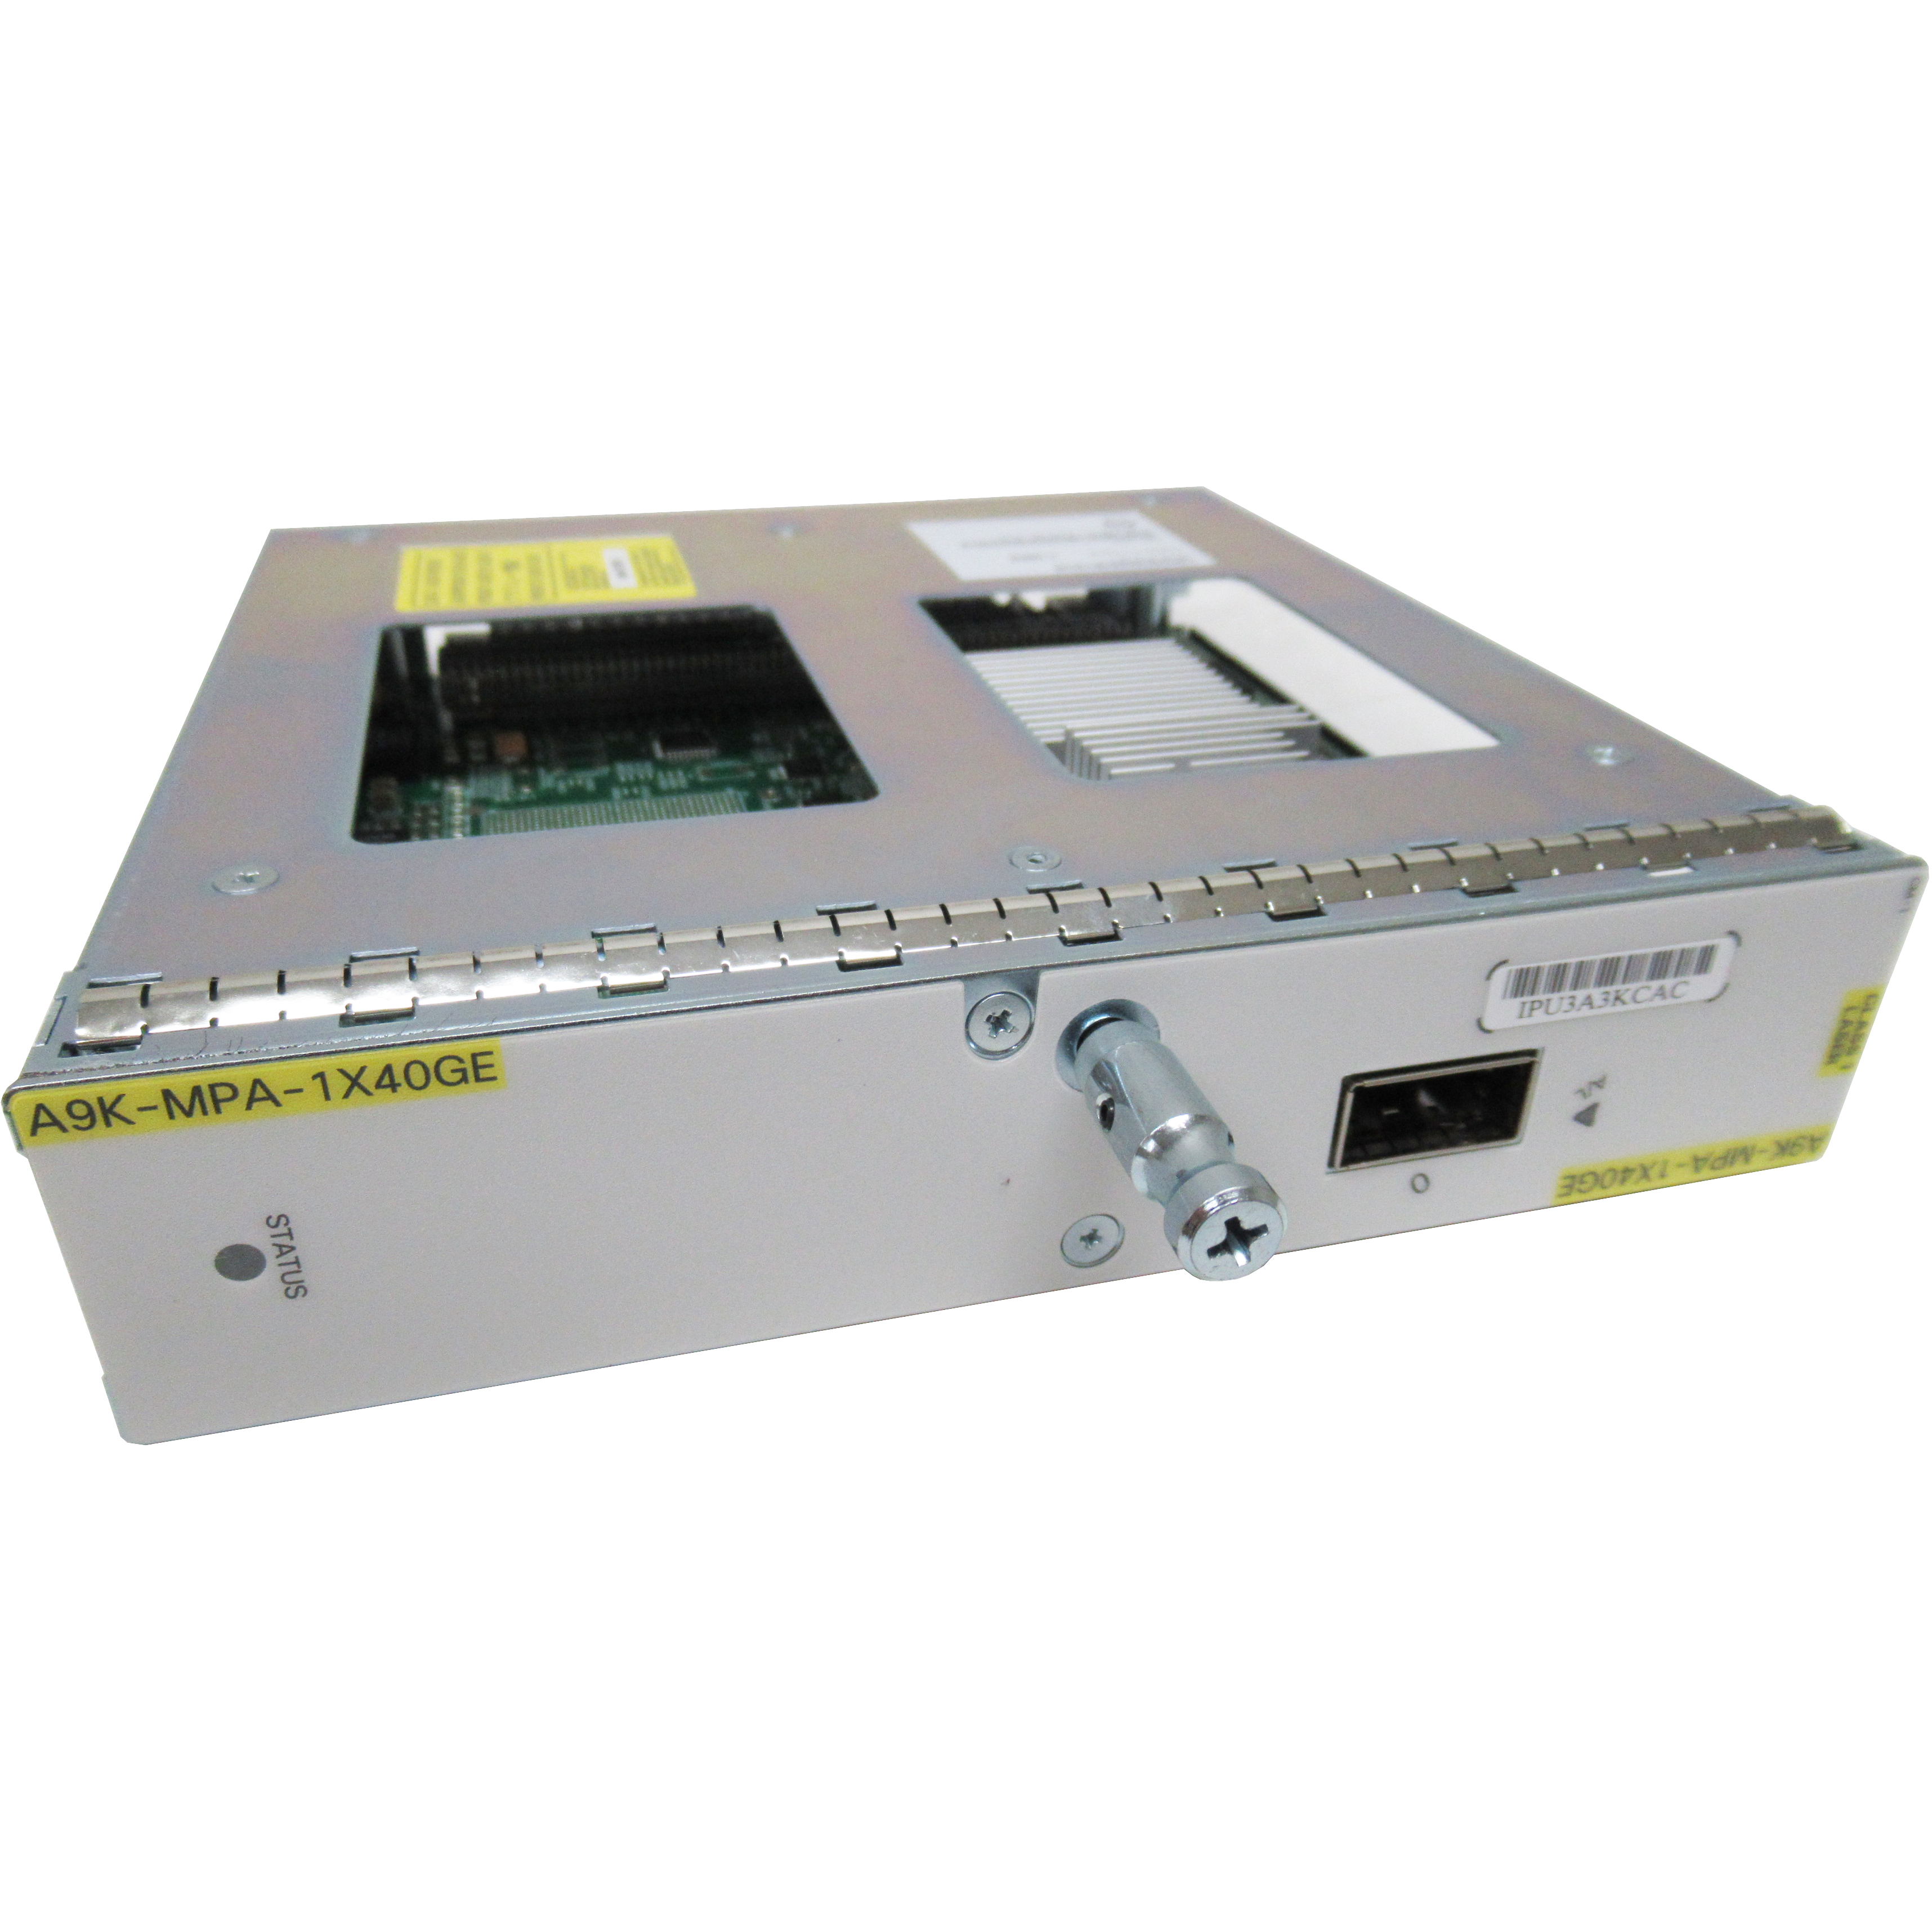 Cisco A9K-MPA-1X40GE